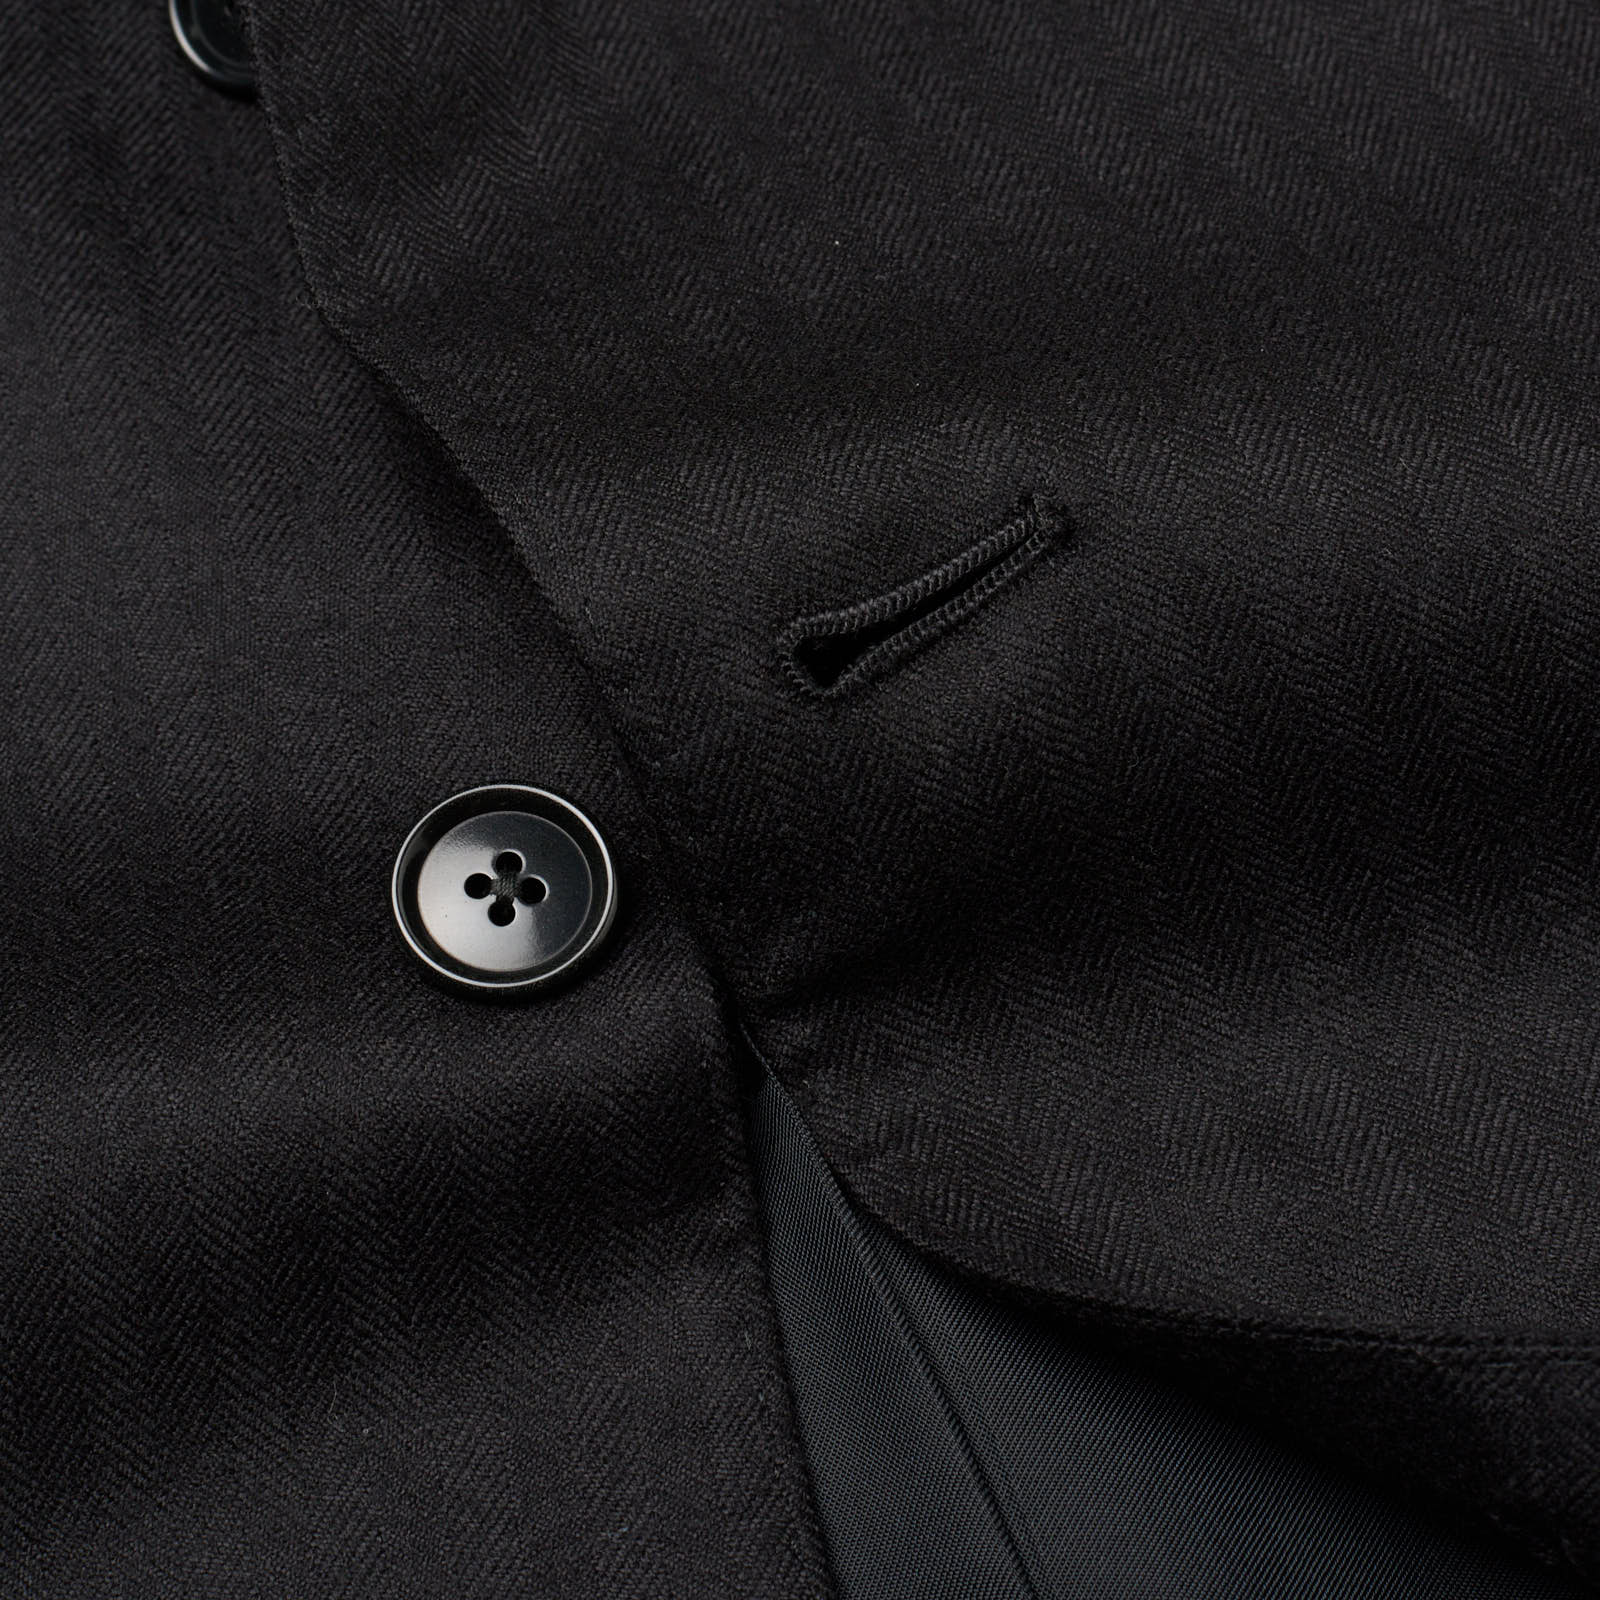 SARTORIA PARTENOPEA for VANNUCCI Black Herringbone Cashmere Jacket EU 46 NEW US 36